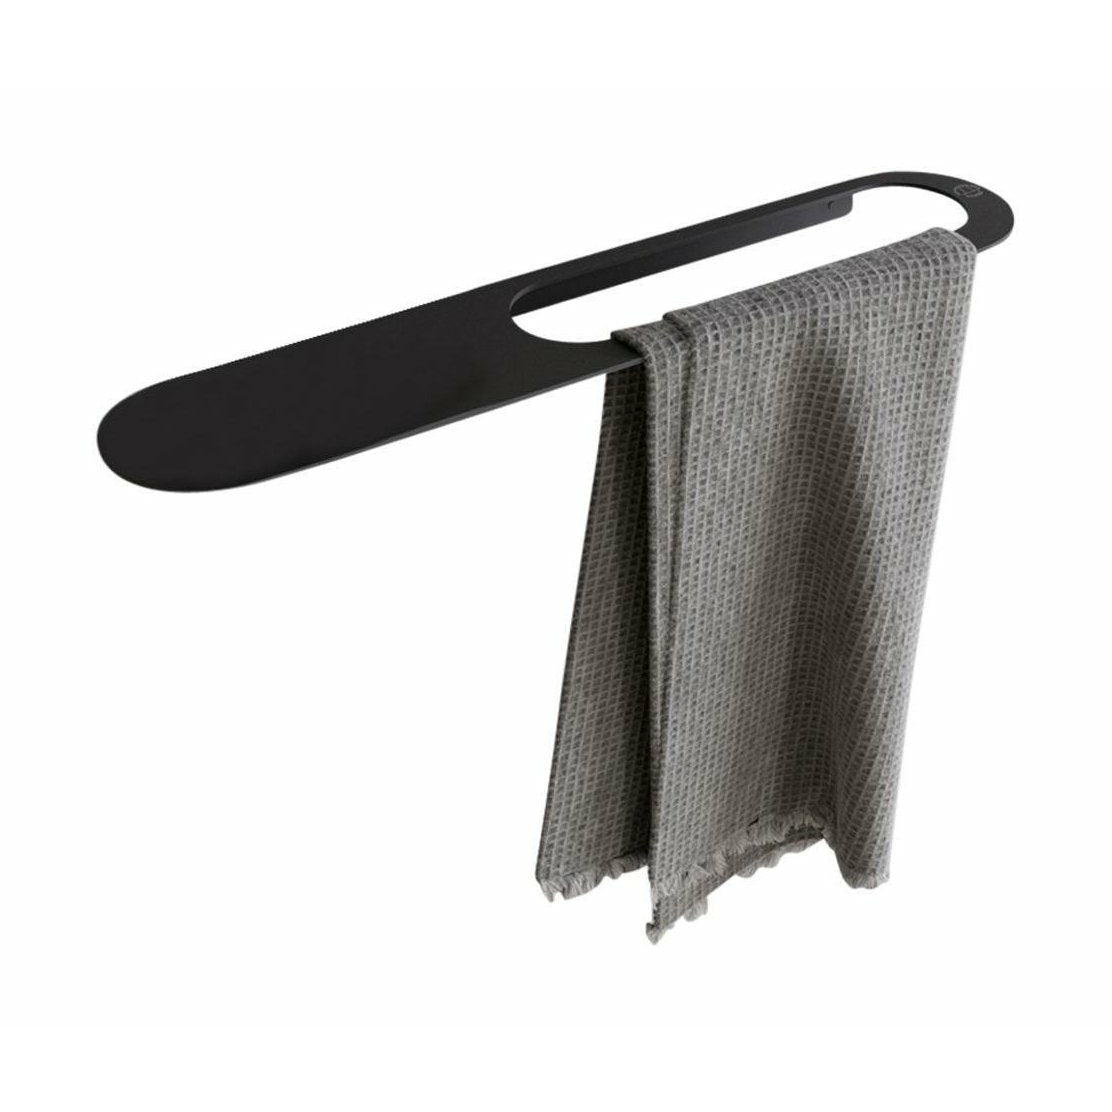 Copenhagen Bath Cb 100 Towel Holder With Shelf, Mat Black